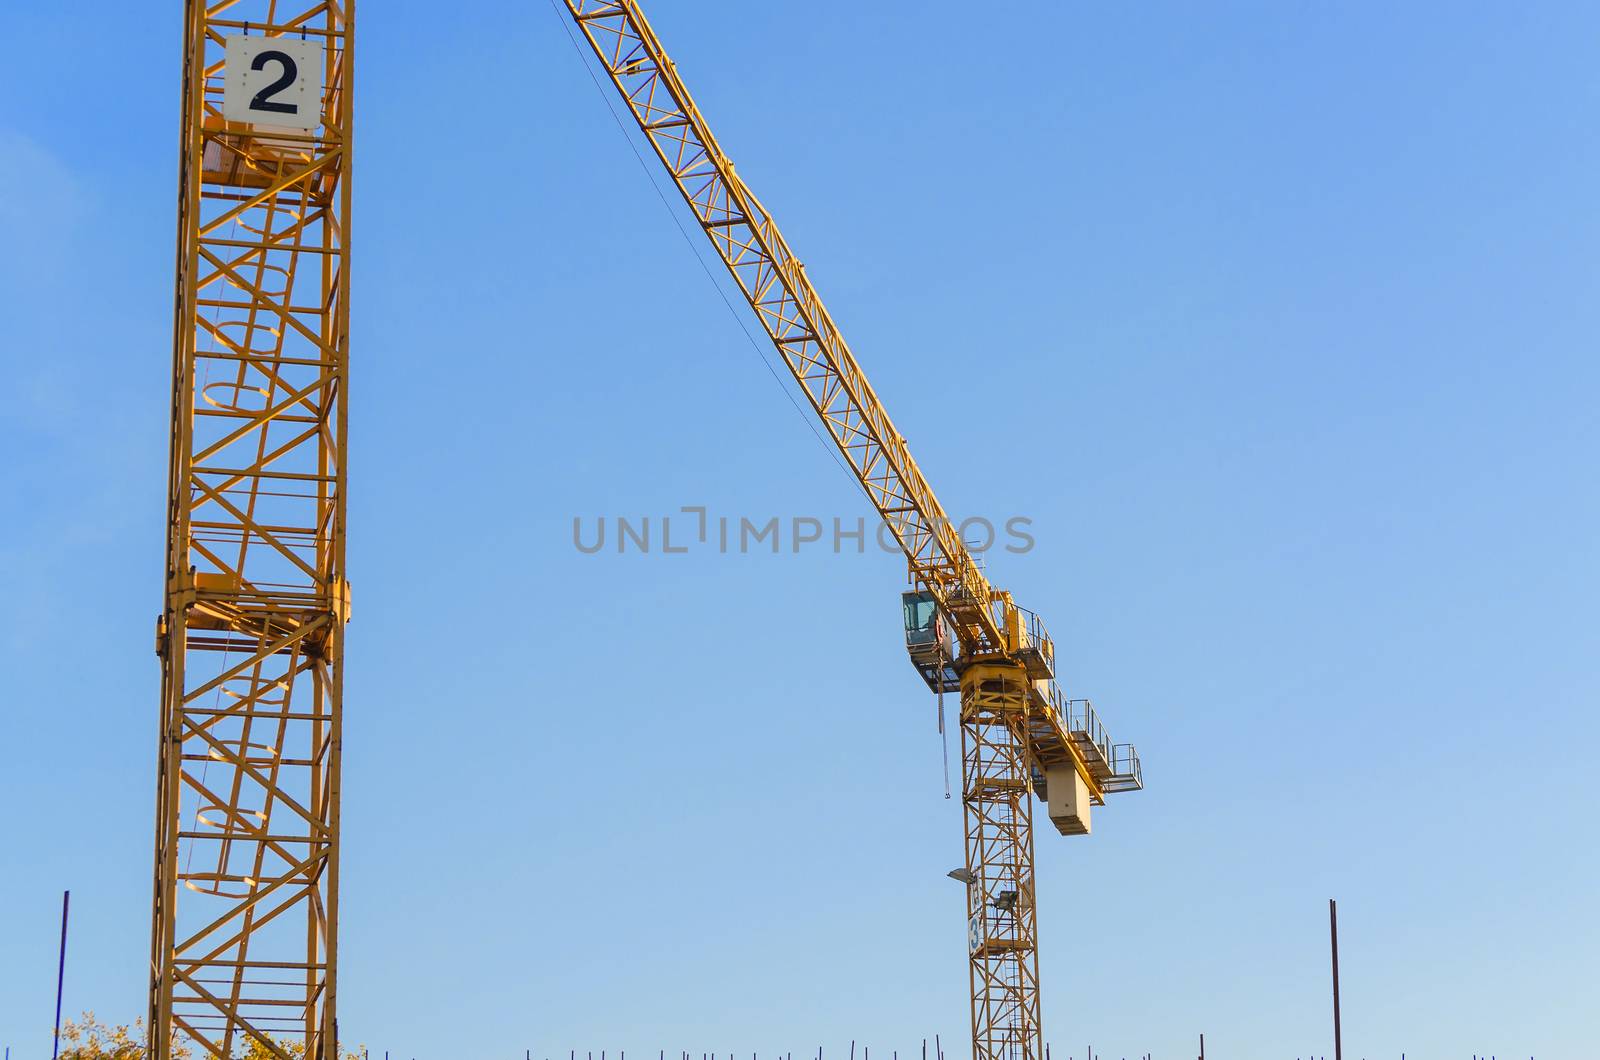 Two Construction cranes on a construction site against a blue sky.